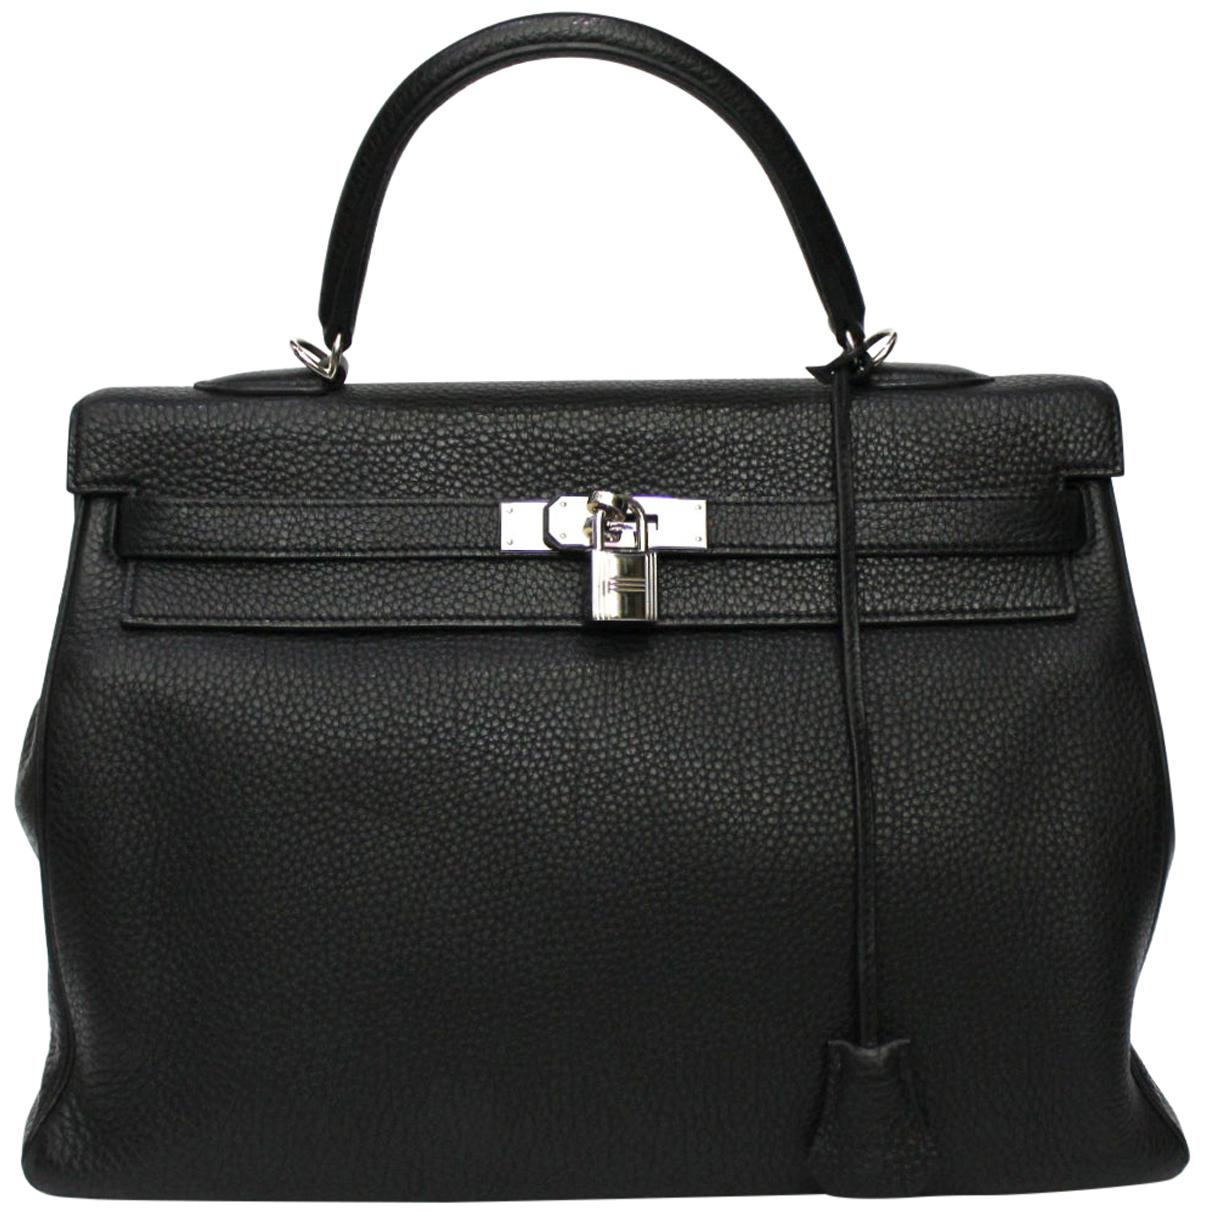 2012 Hermès Noir Leather Kelly Bag